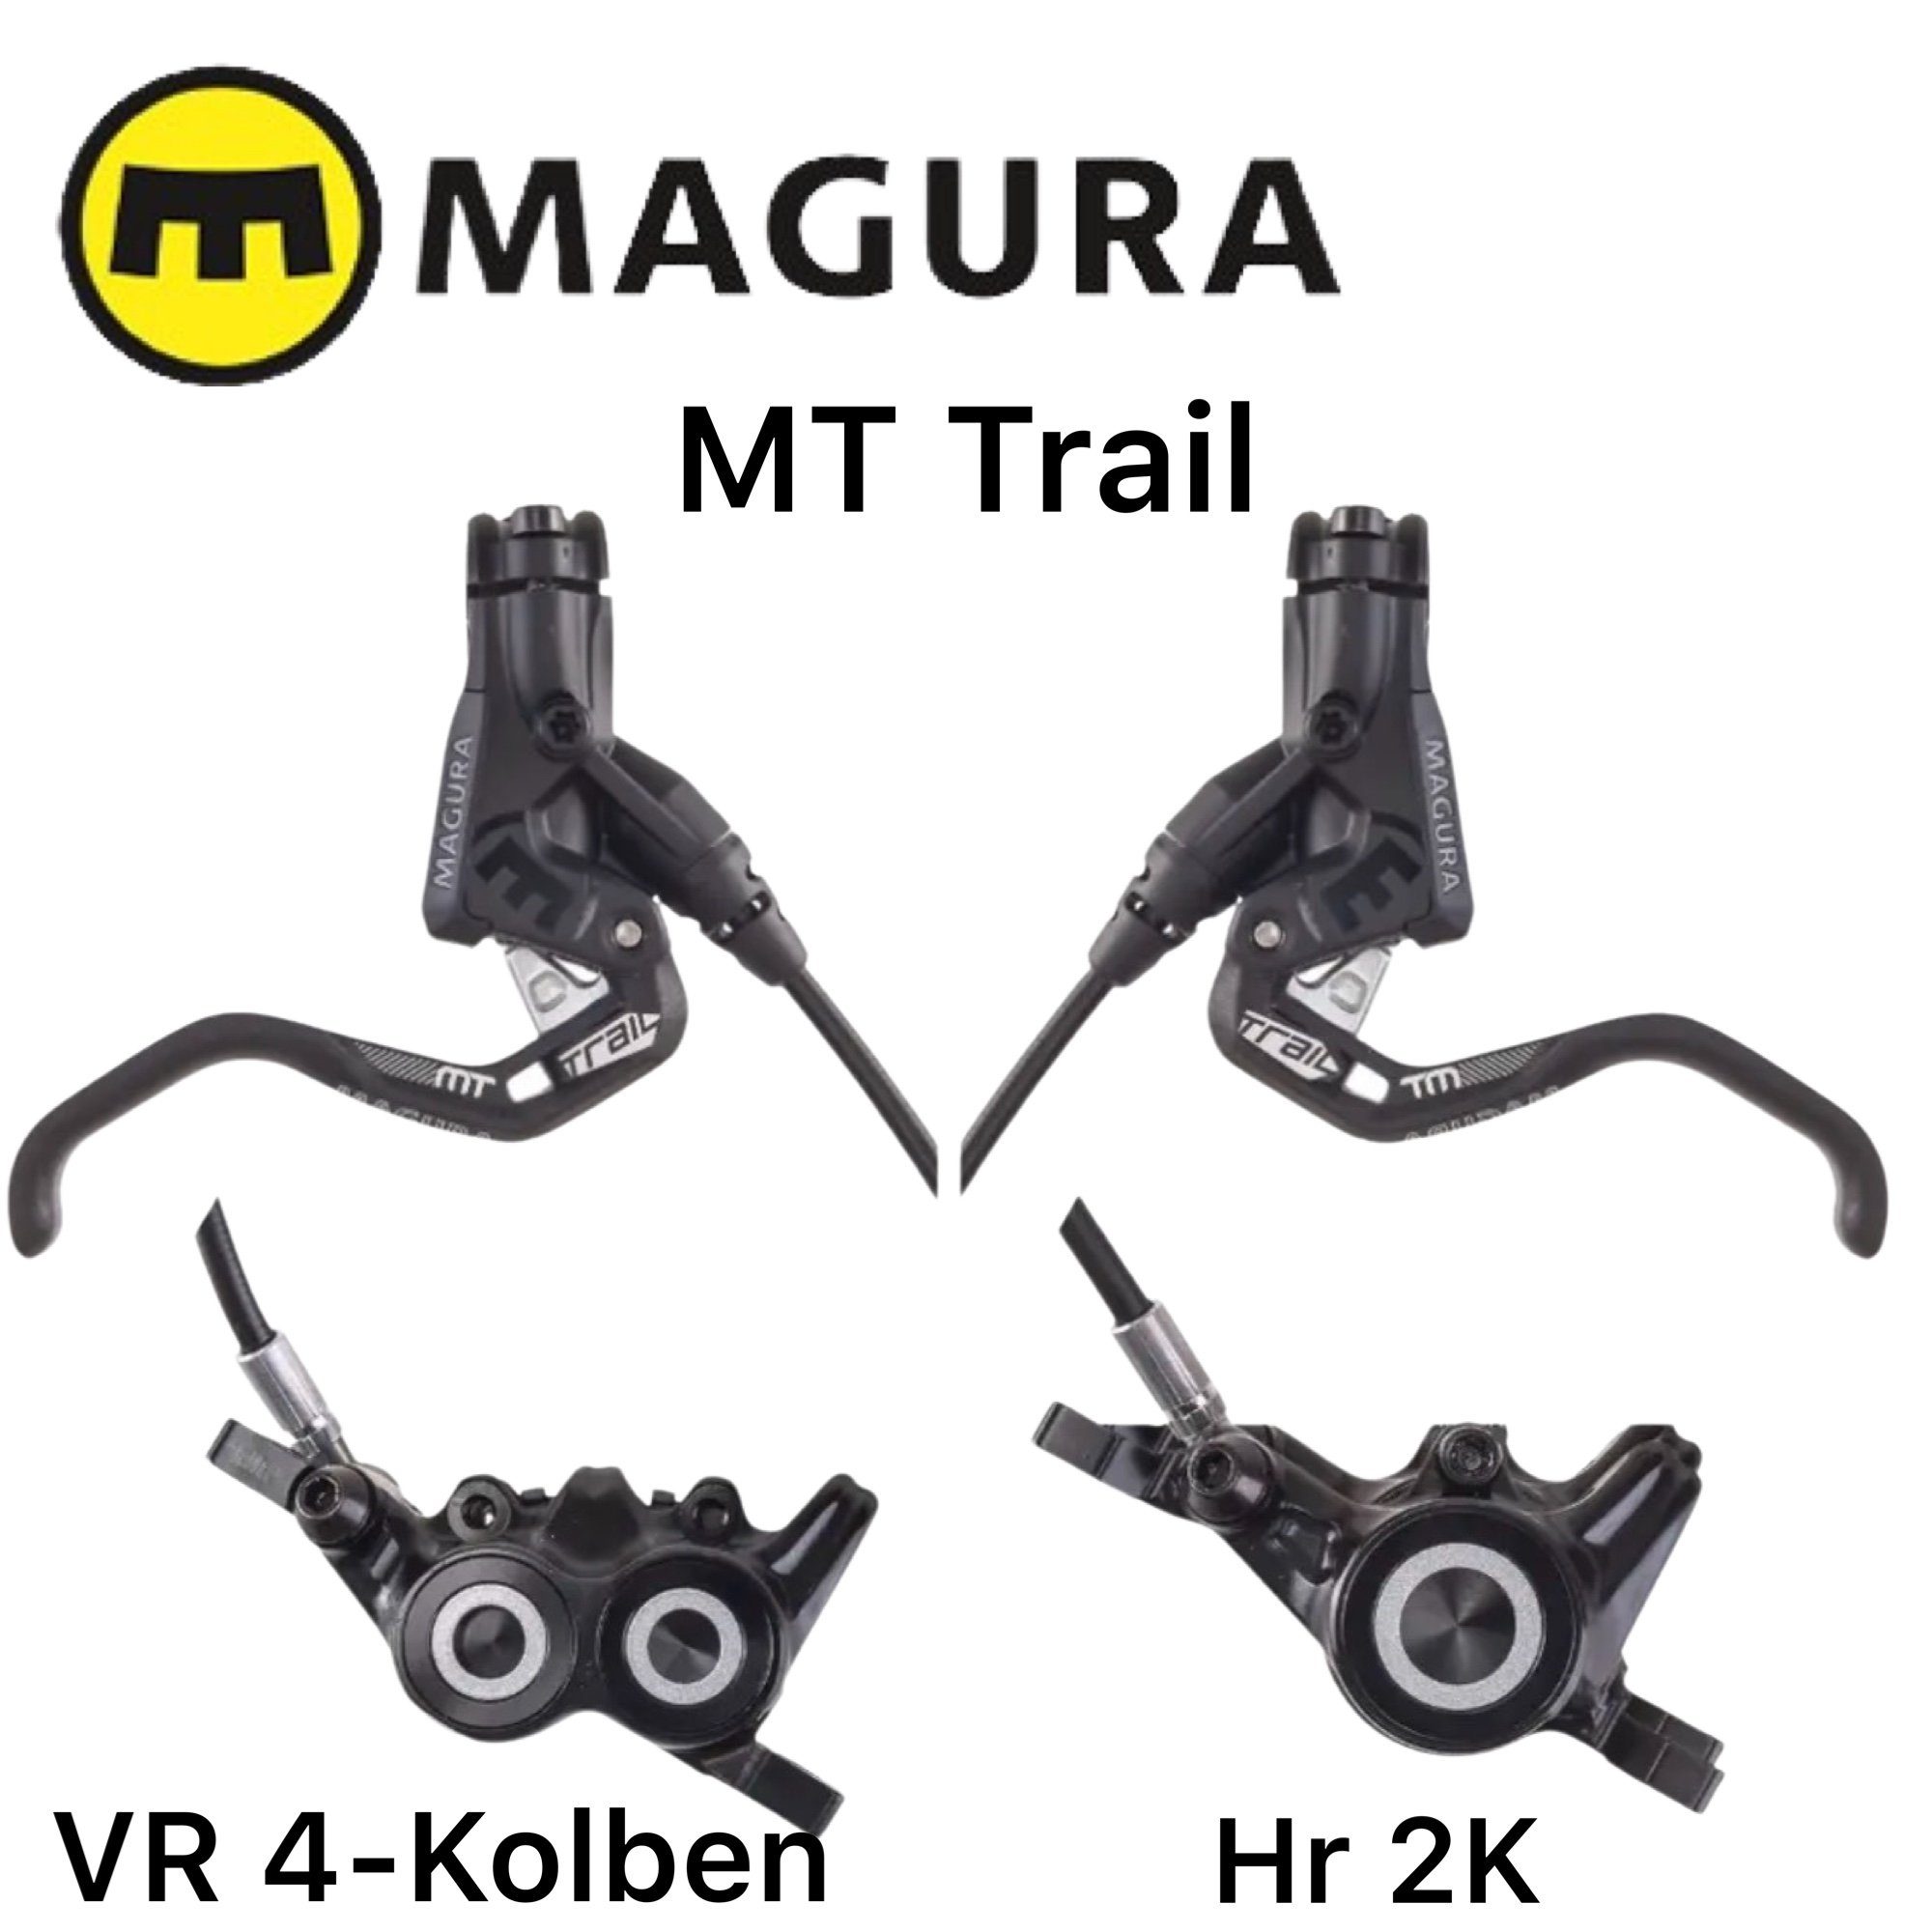 Magura MT5 eSTOP Bremssattel inkl. Bremsbelägen schwarz/silber